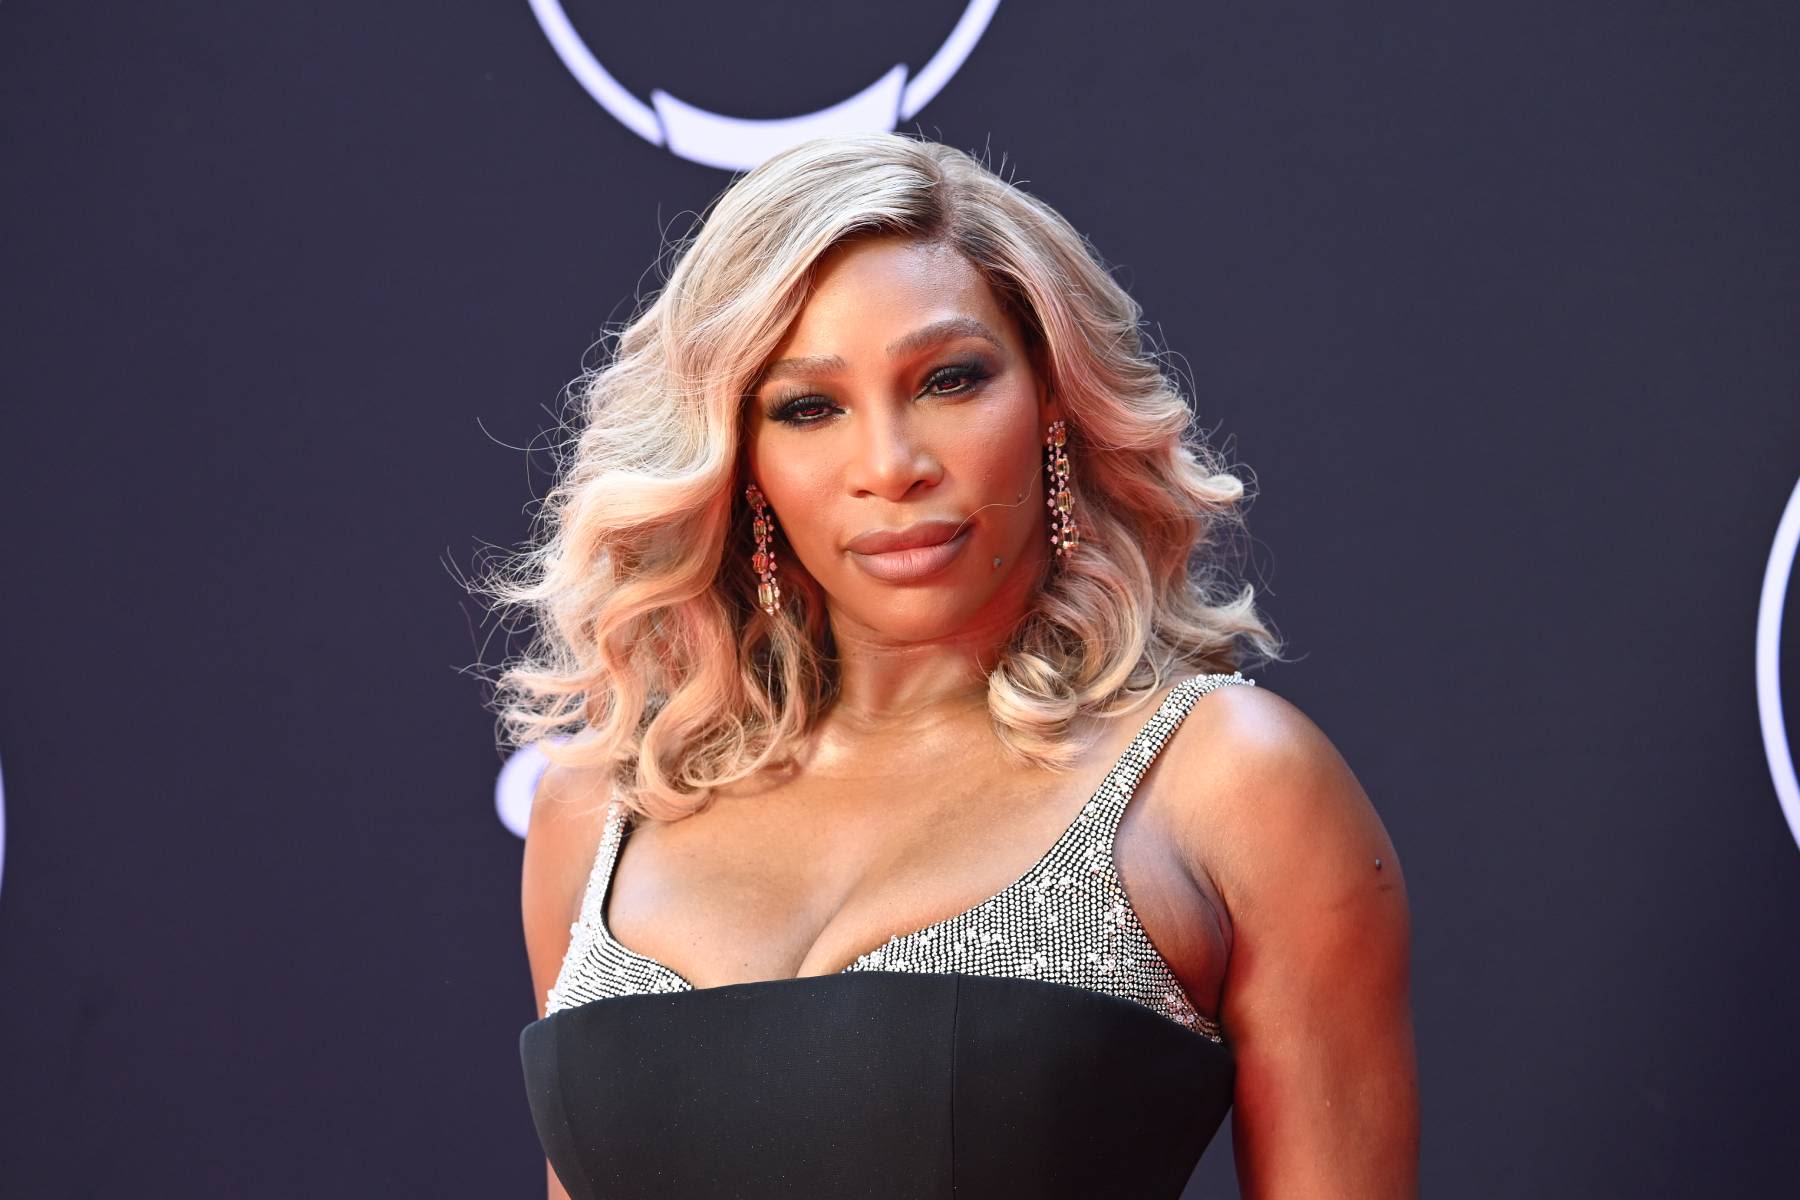 Serena Williams Crip Walks to ‘Not Like Us,’ Roasts Drake at ESPYs